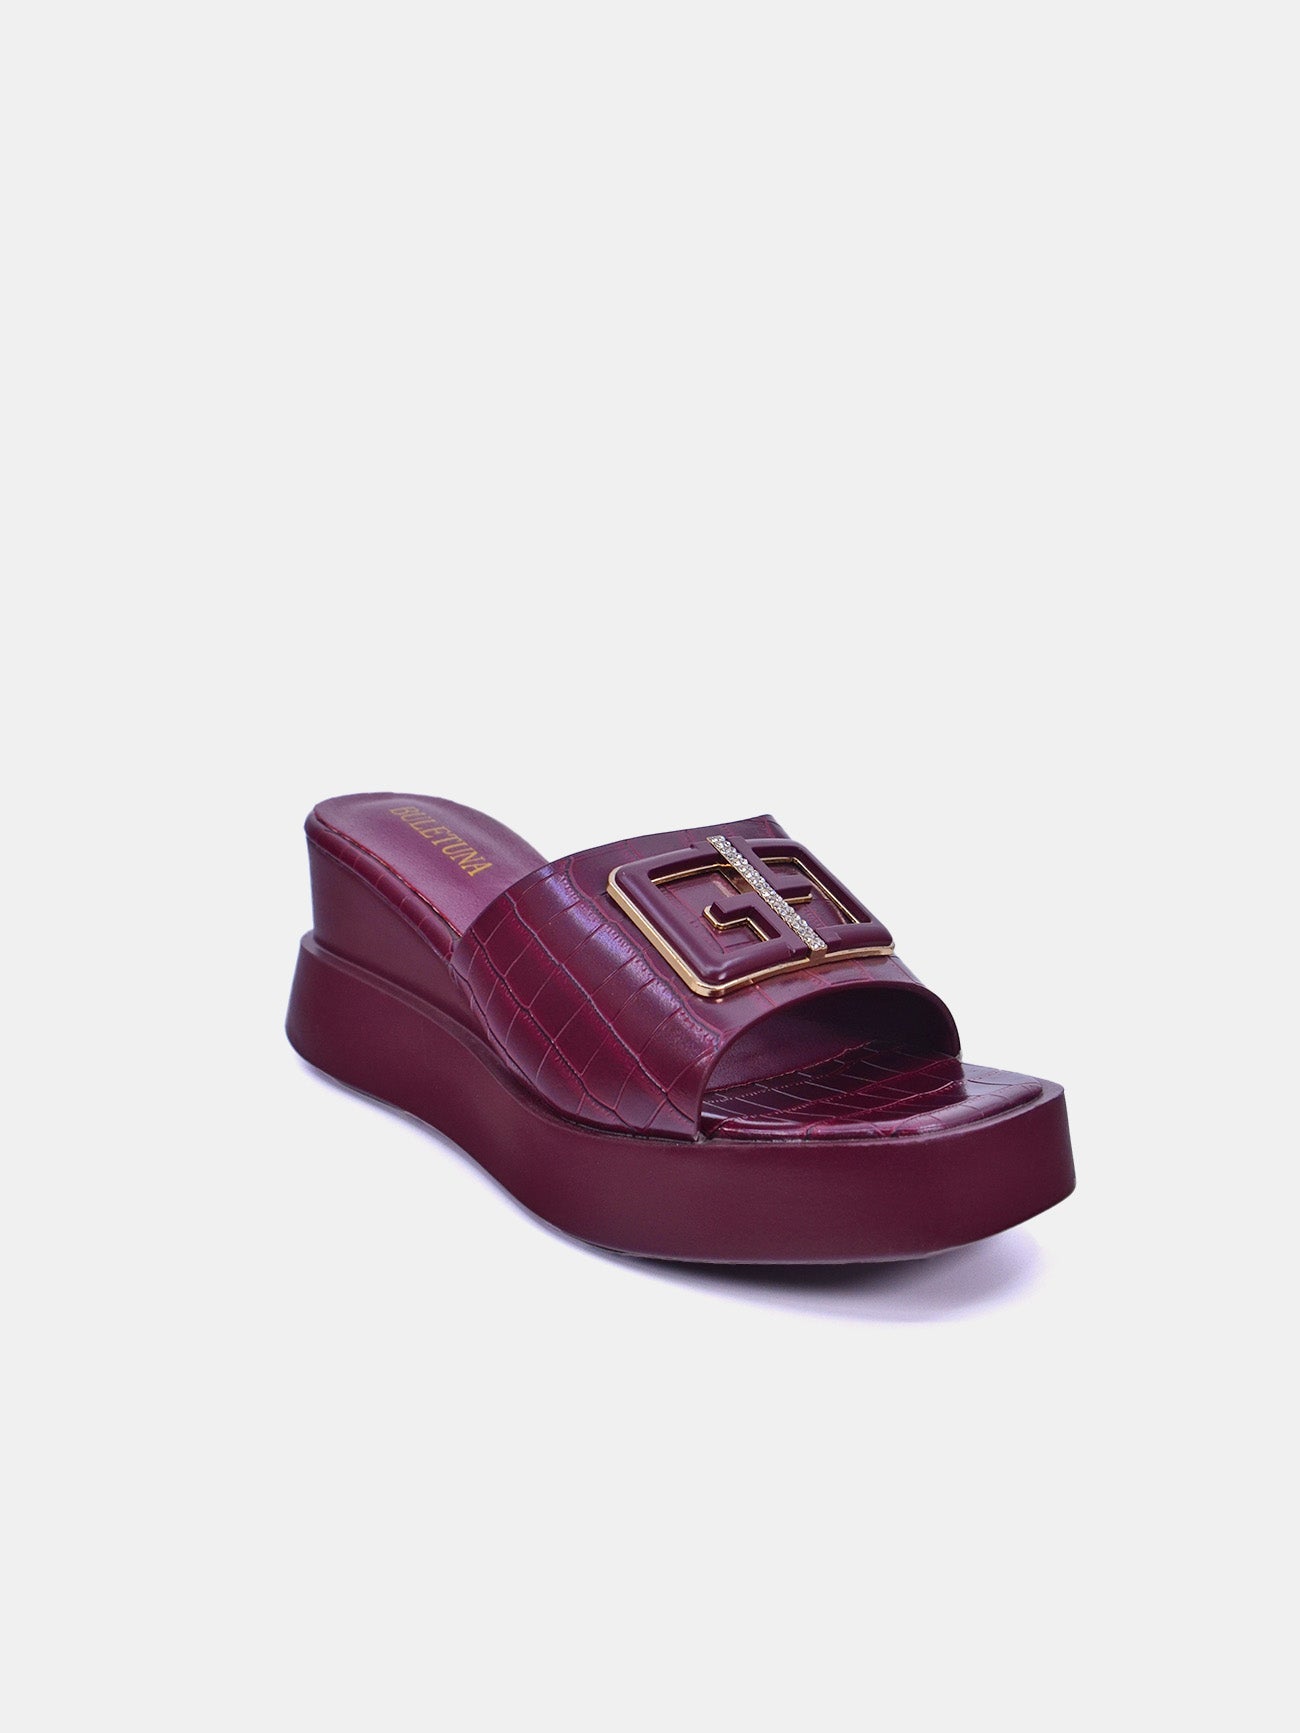 Buletuna YZ629 Women's Sandals #color_Maroon